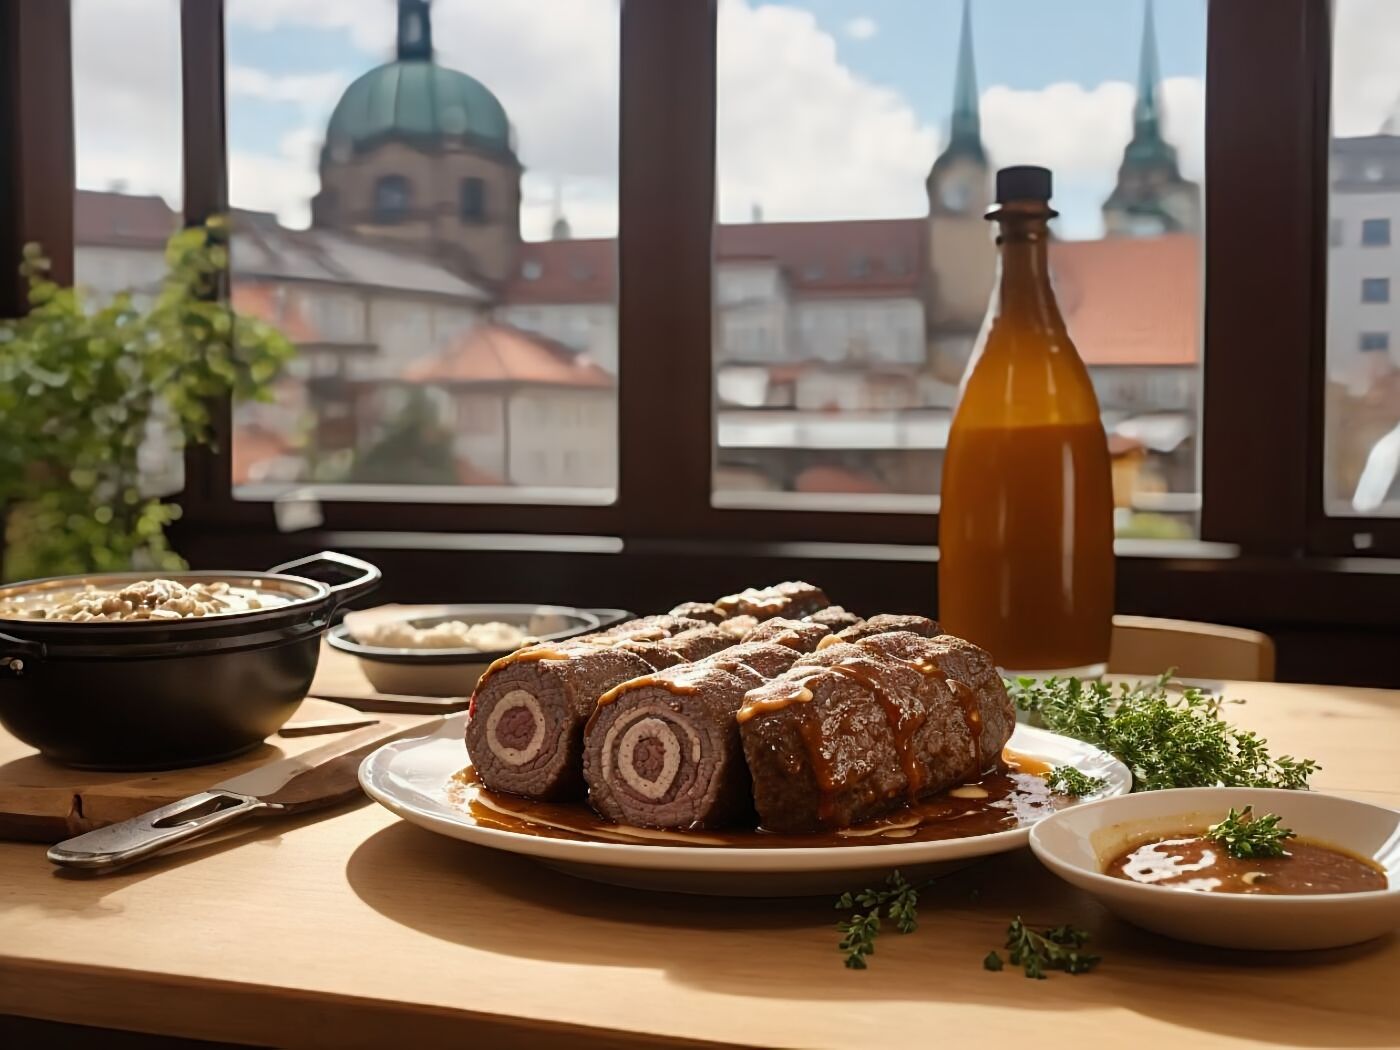 German Rouladen and Gravy Recipe